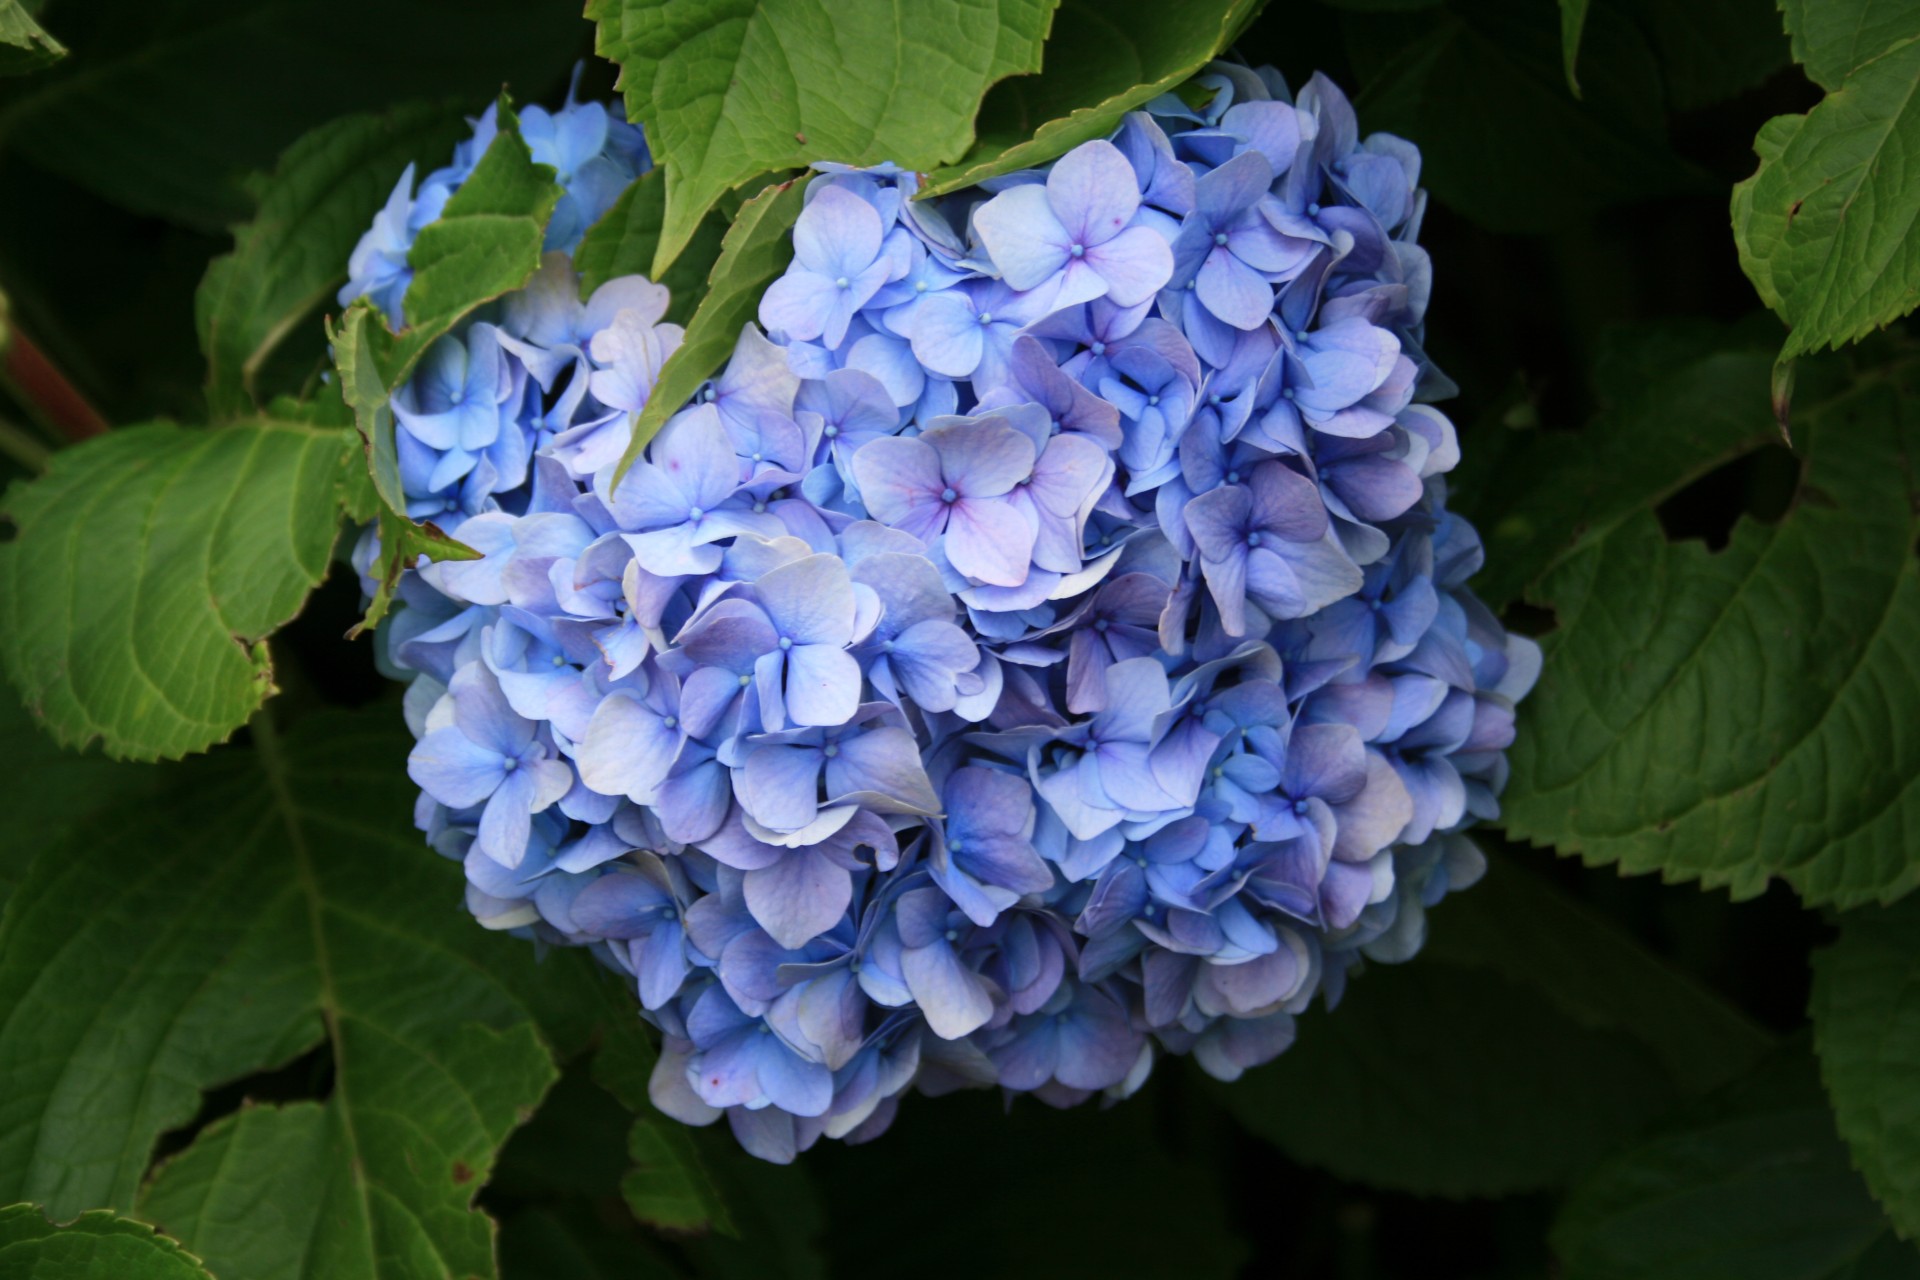 Shrub,green,flower,blue,hydrangea - free image from needpix.com.